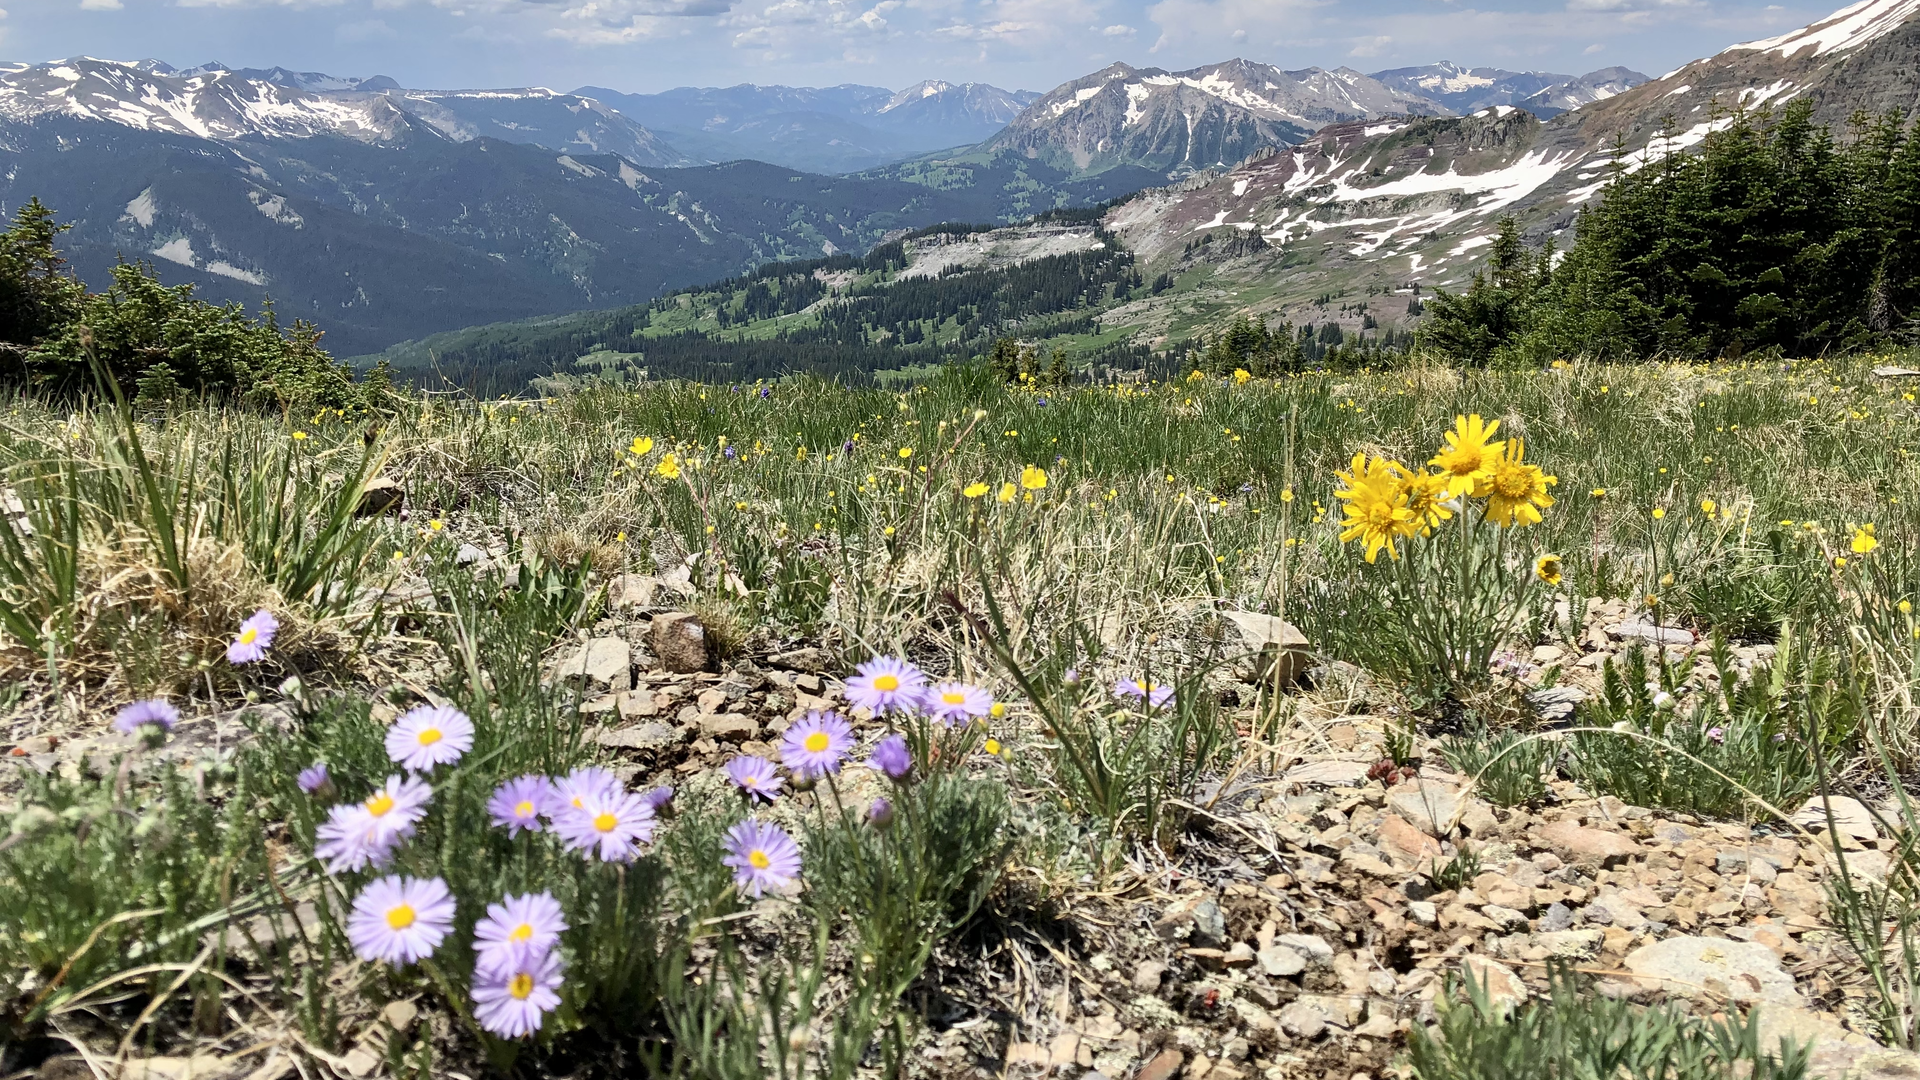 Wildflowers in Colorado - 7.233 - Extension